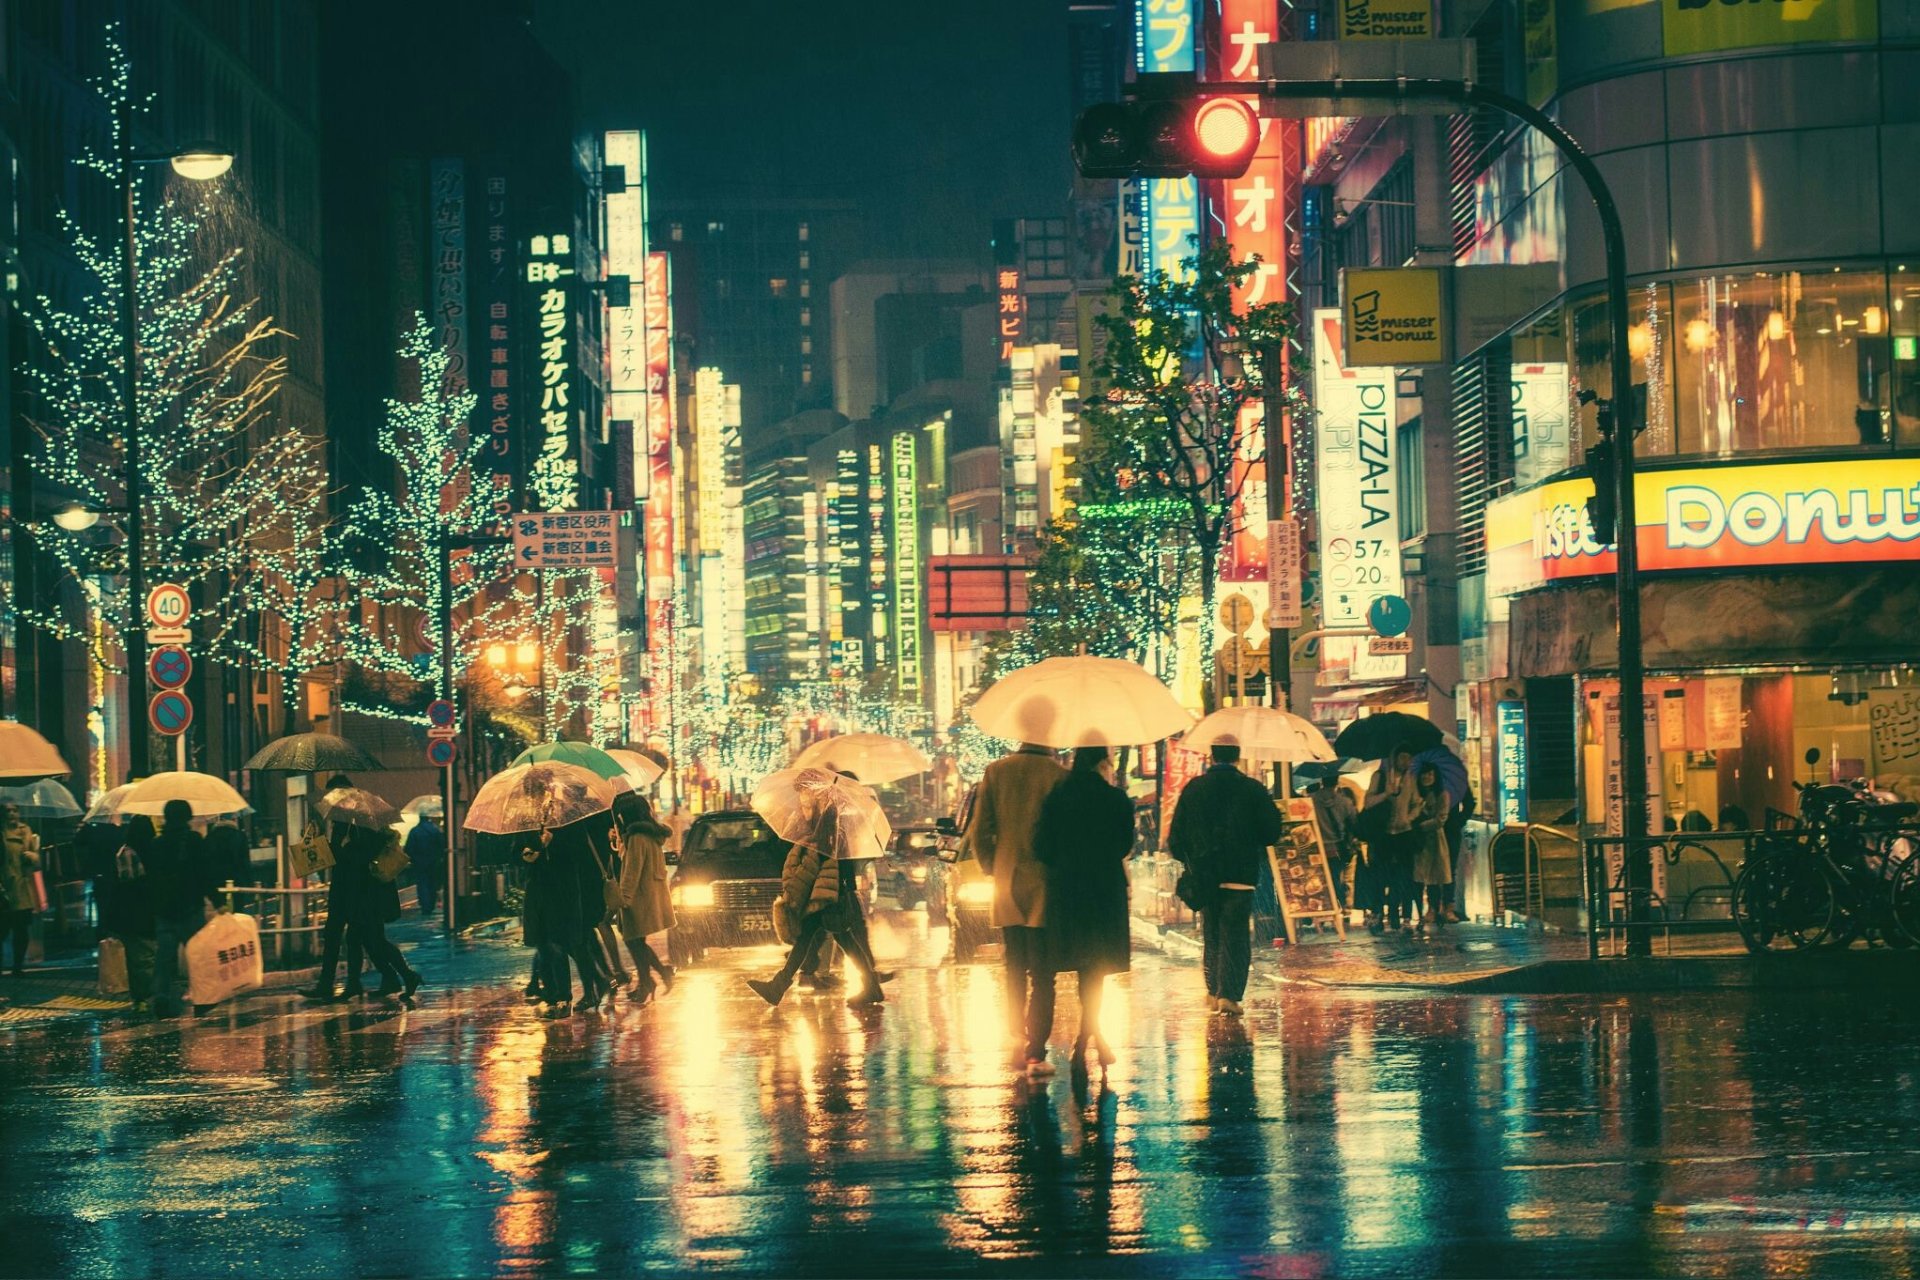 Rainy nights in Tokyo